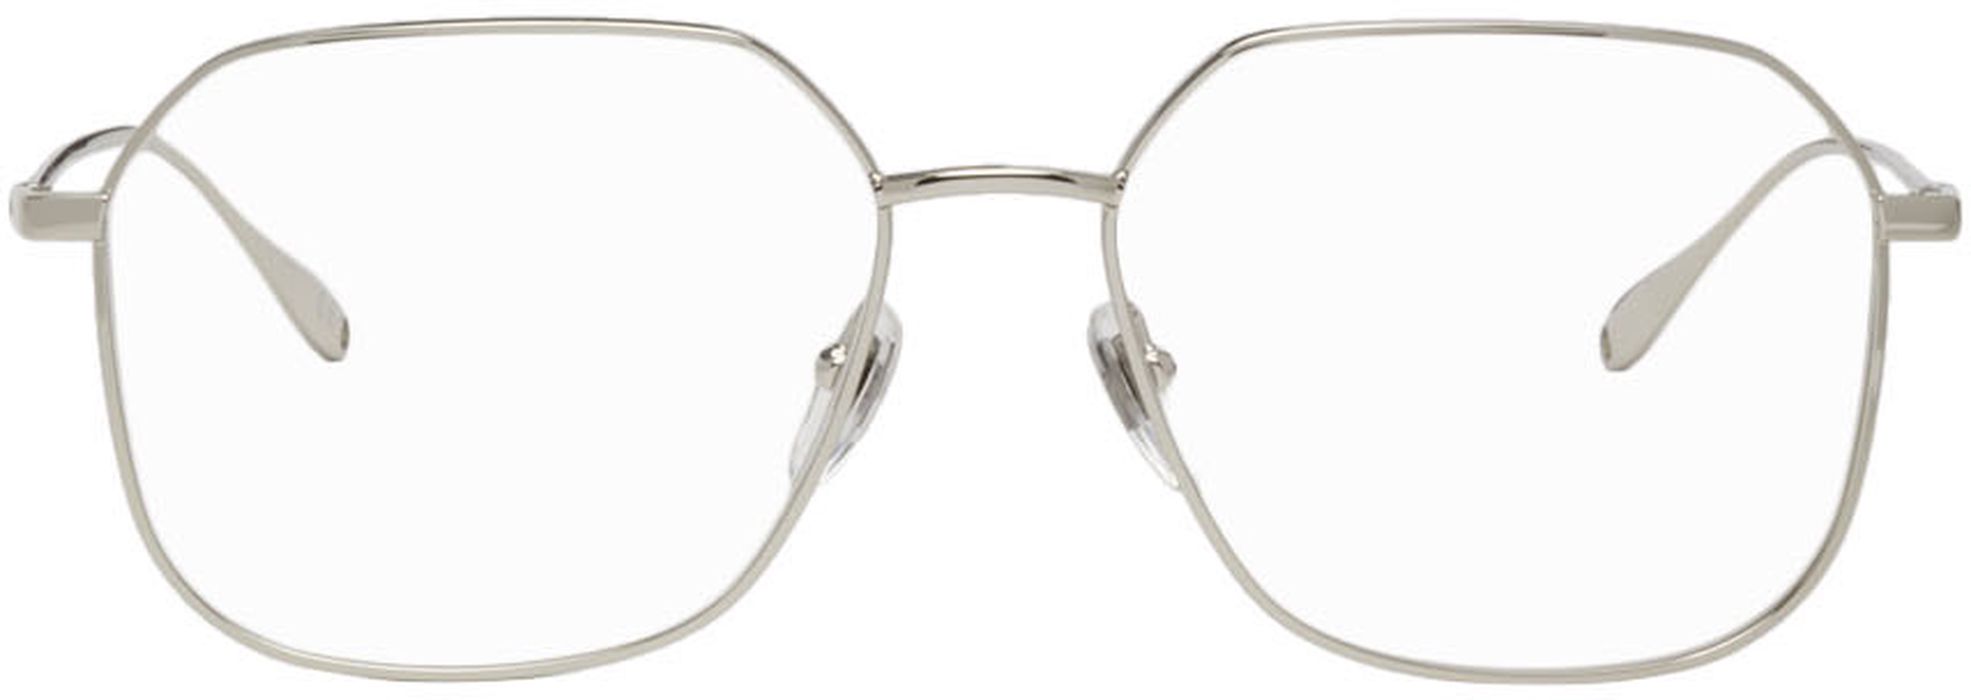 Gucci Silver Rectangular Glasses